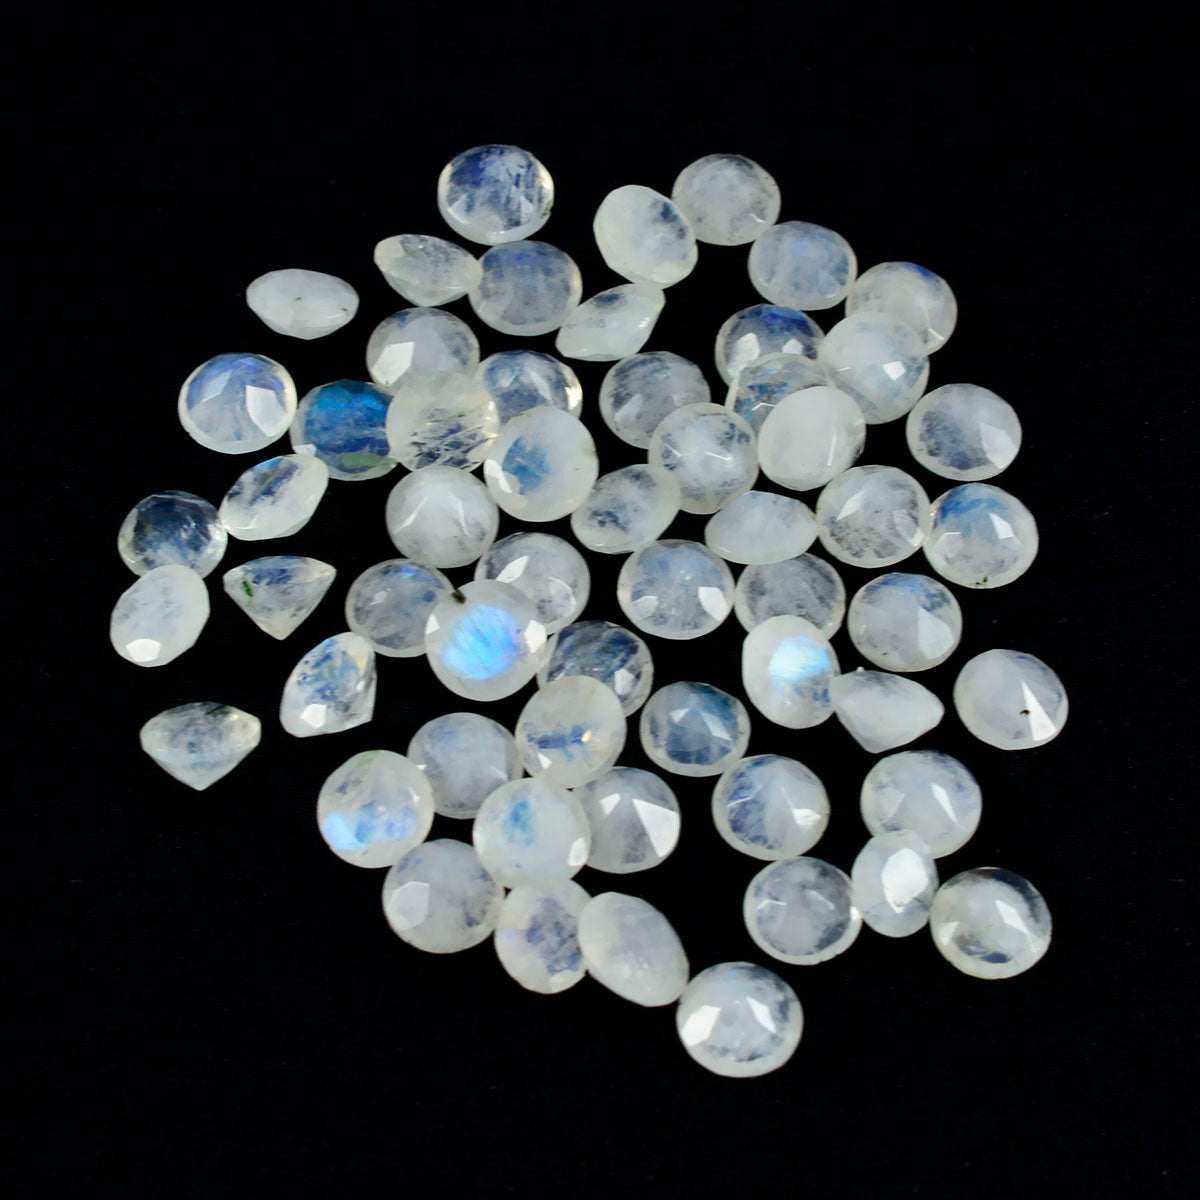 Riyogems 1PC White Rainbow Moonstone Faceted 2x2 mm Round Shape handsome Quality Loose Gemstone